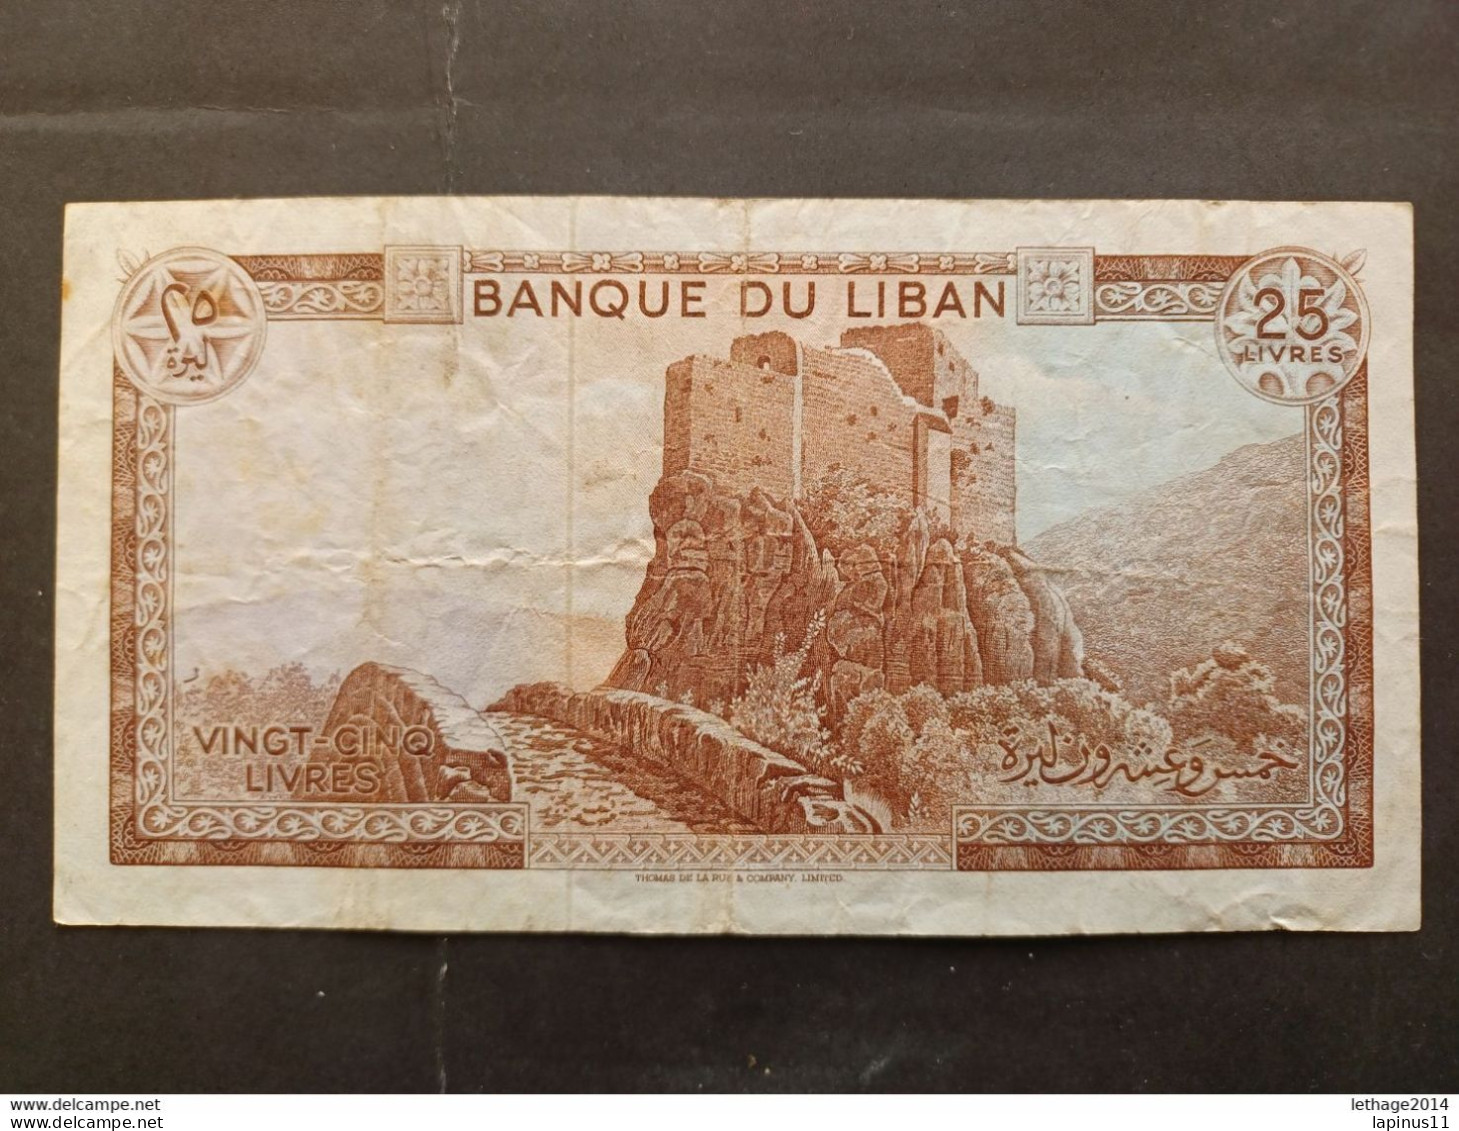 BANKNOTE LEBANON لبنان LIBAN 6x25 LIVRES 1974 CIRCULATED GOOD CONDITION - Liban